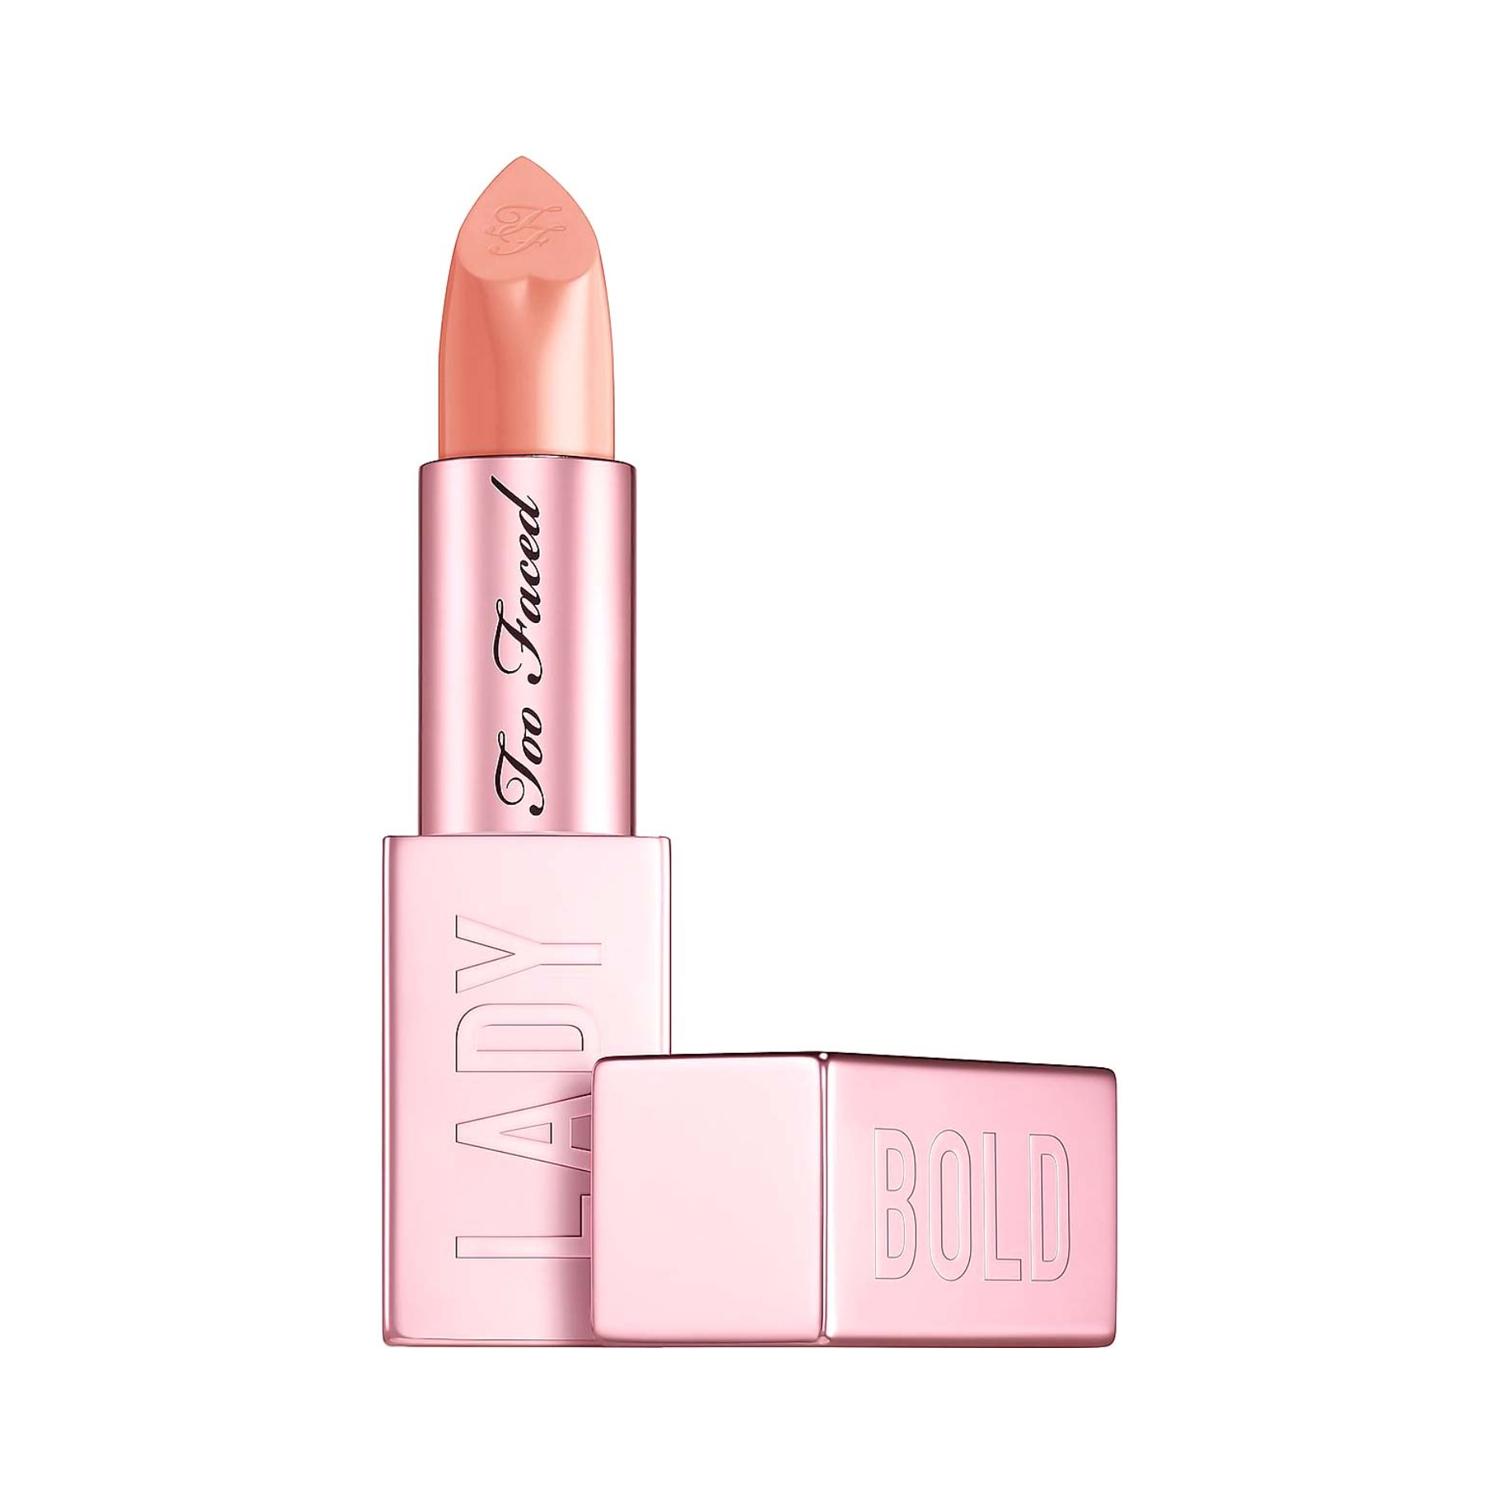 too faced lady bold cream lipstick - brave (4g)